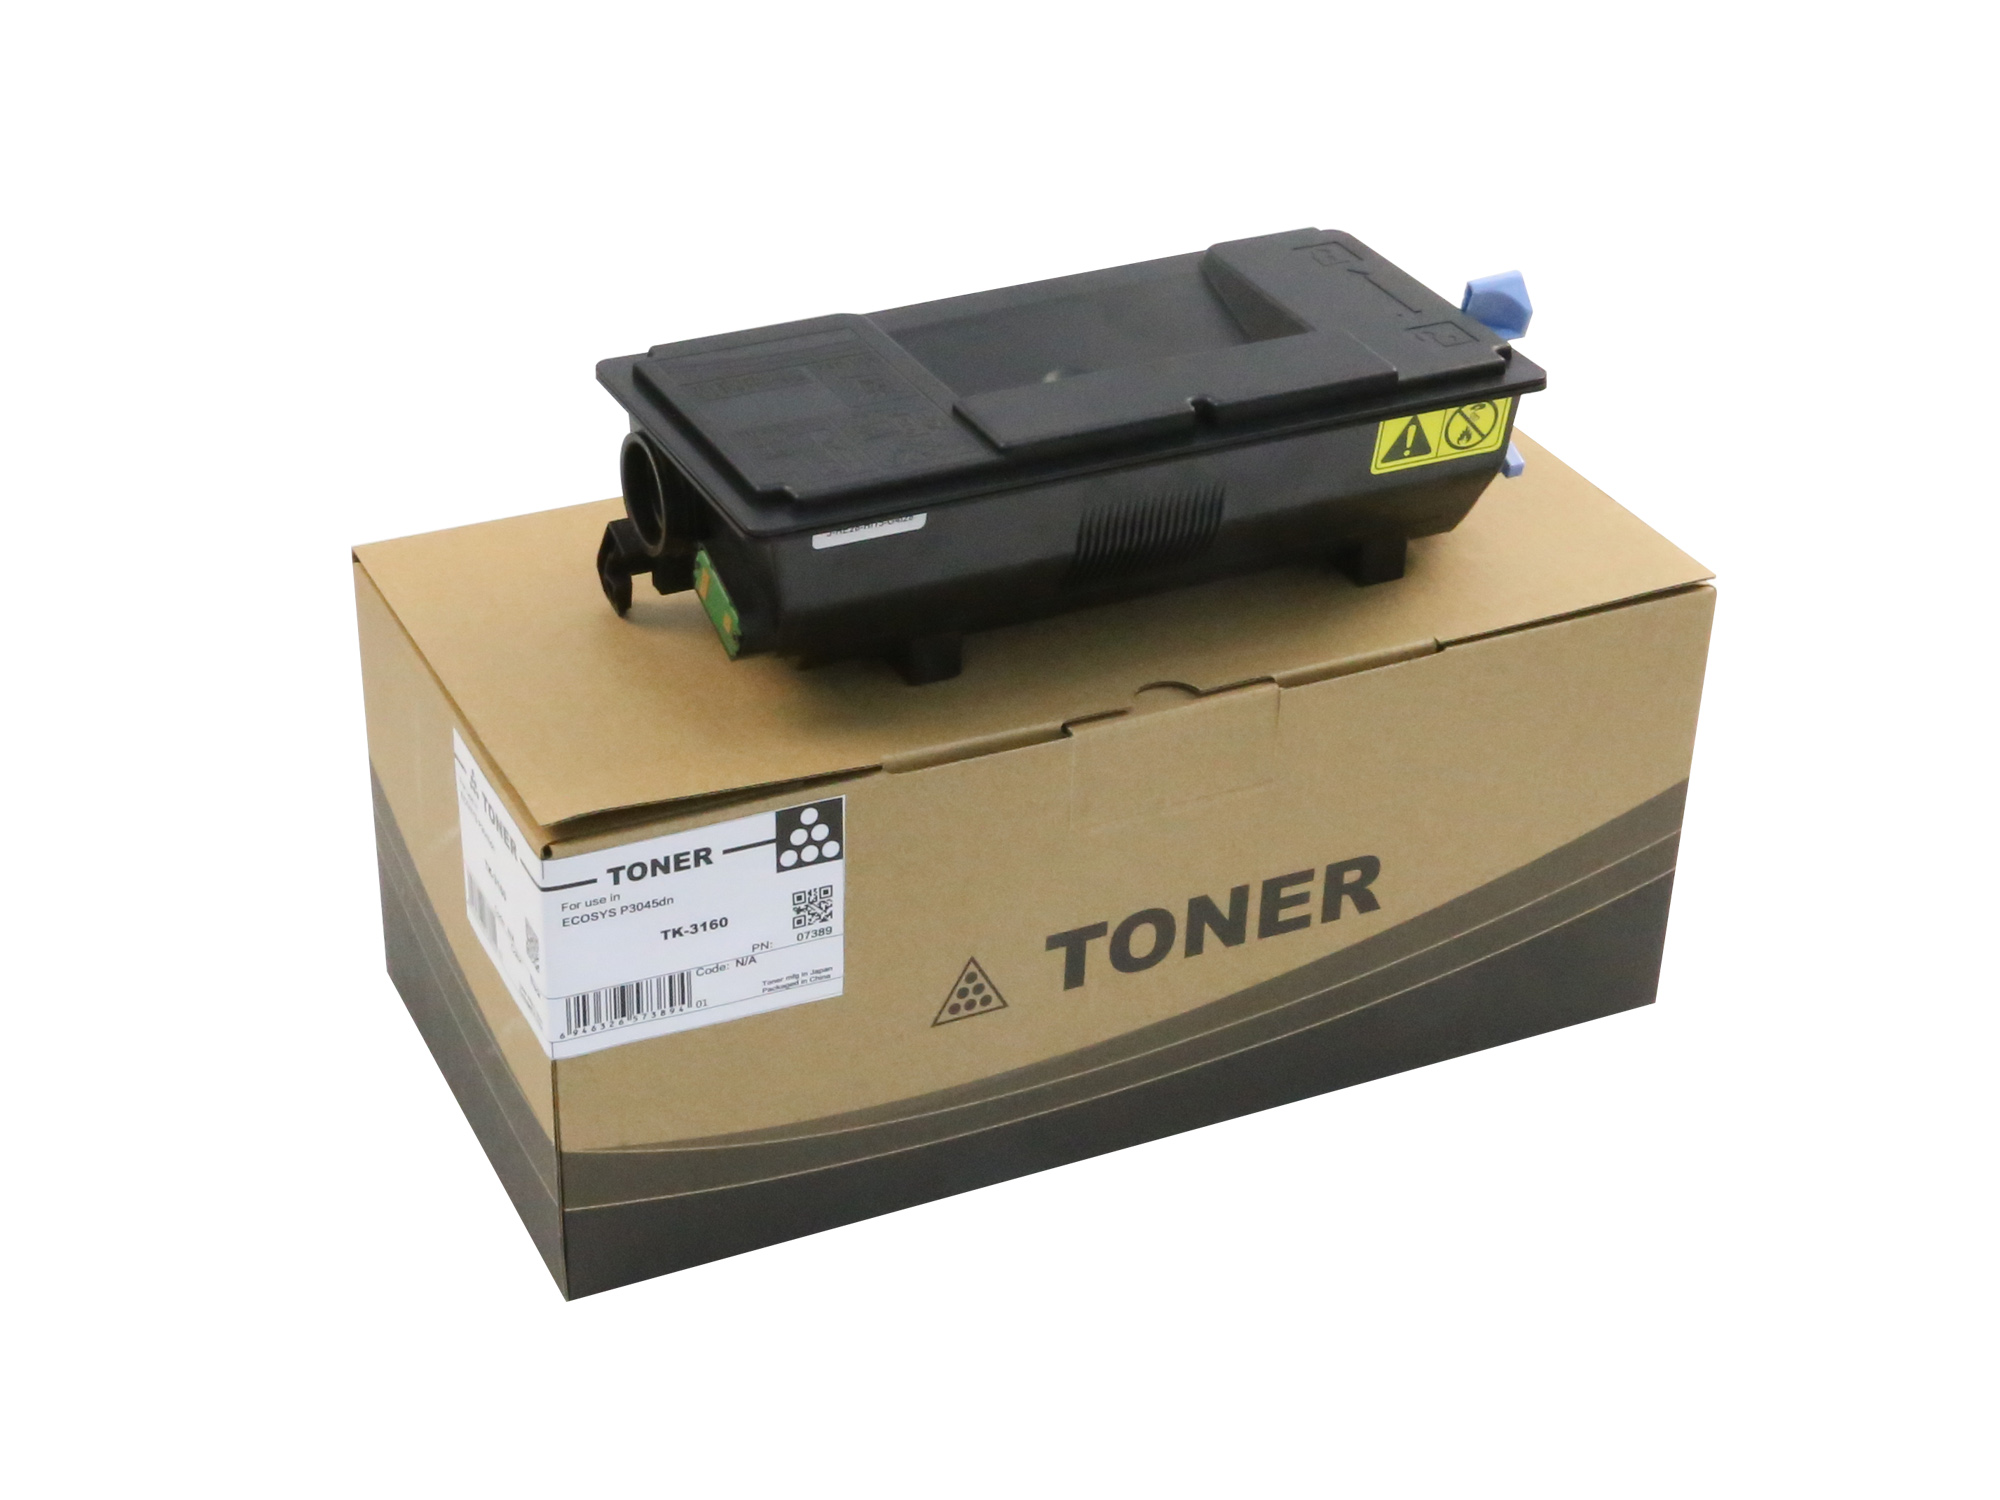 TK-3160 Toner Cartridge for Kyocera ECOSYS P3045dn